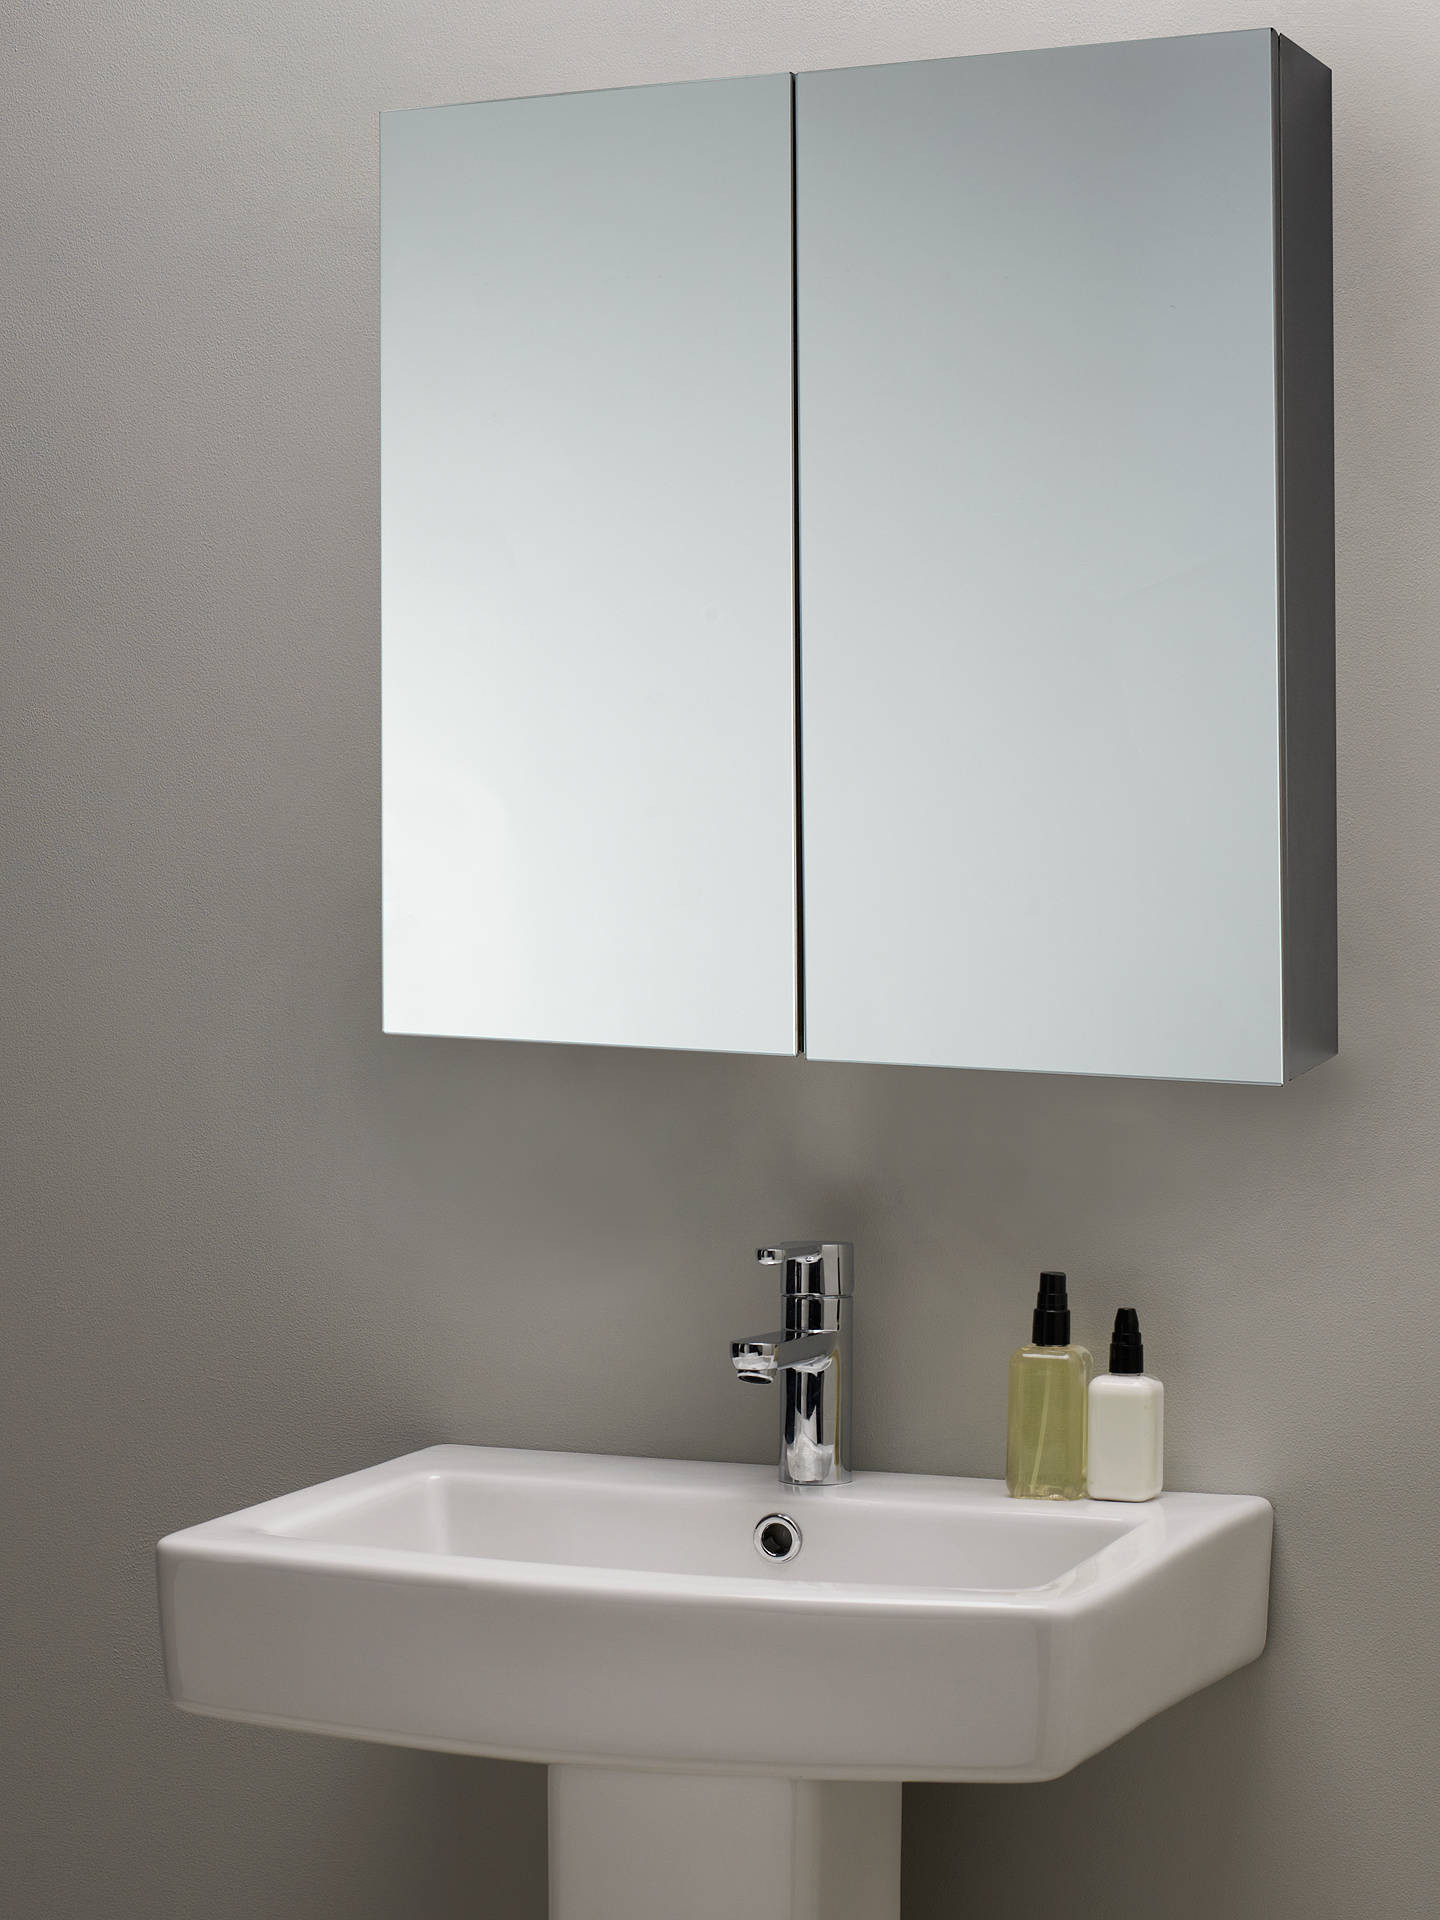 Bathroom Cabinet Mirror
 John Lewis & Partners Double Mirrored Bathroom Cabinet